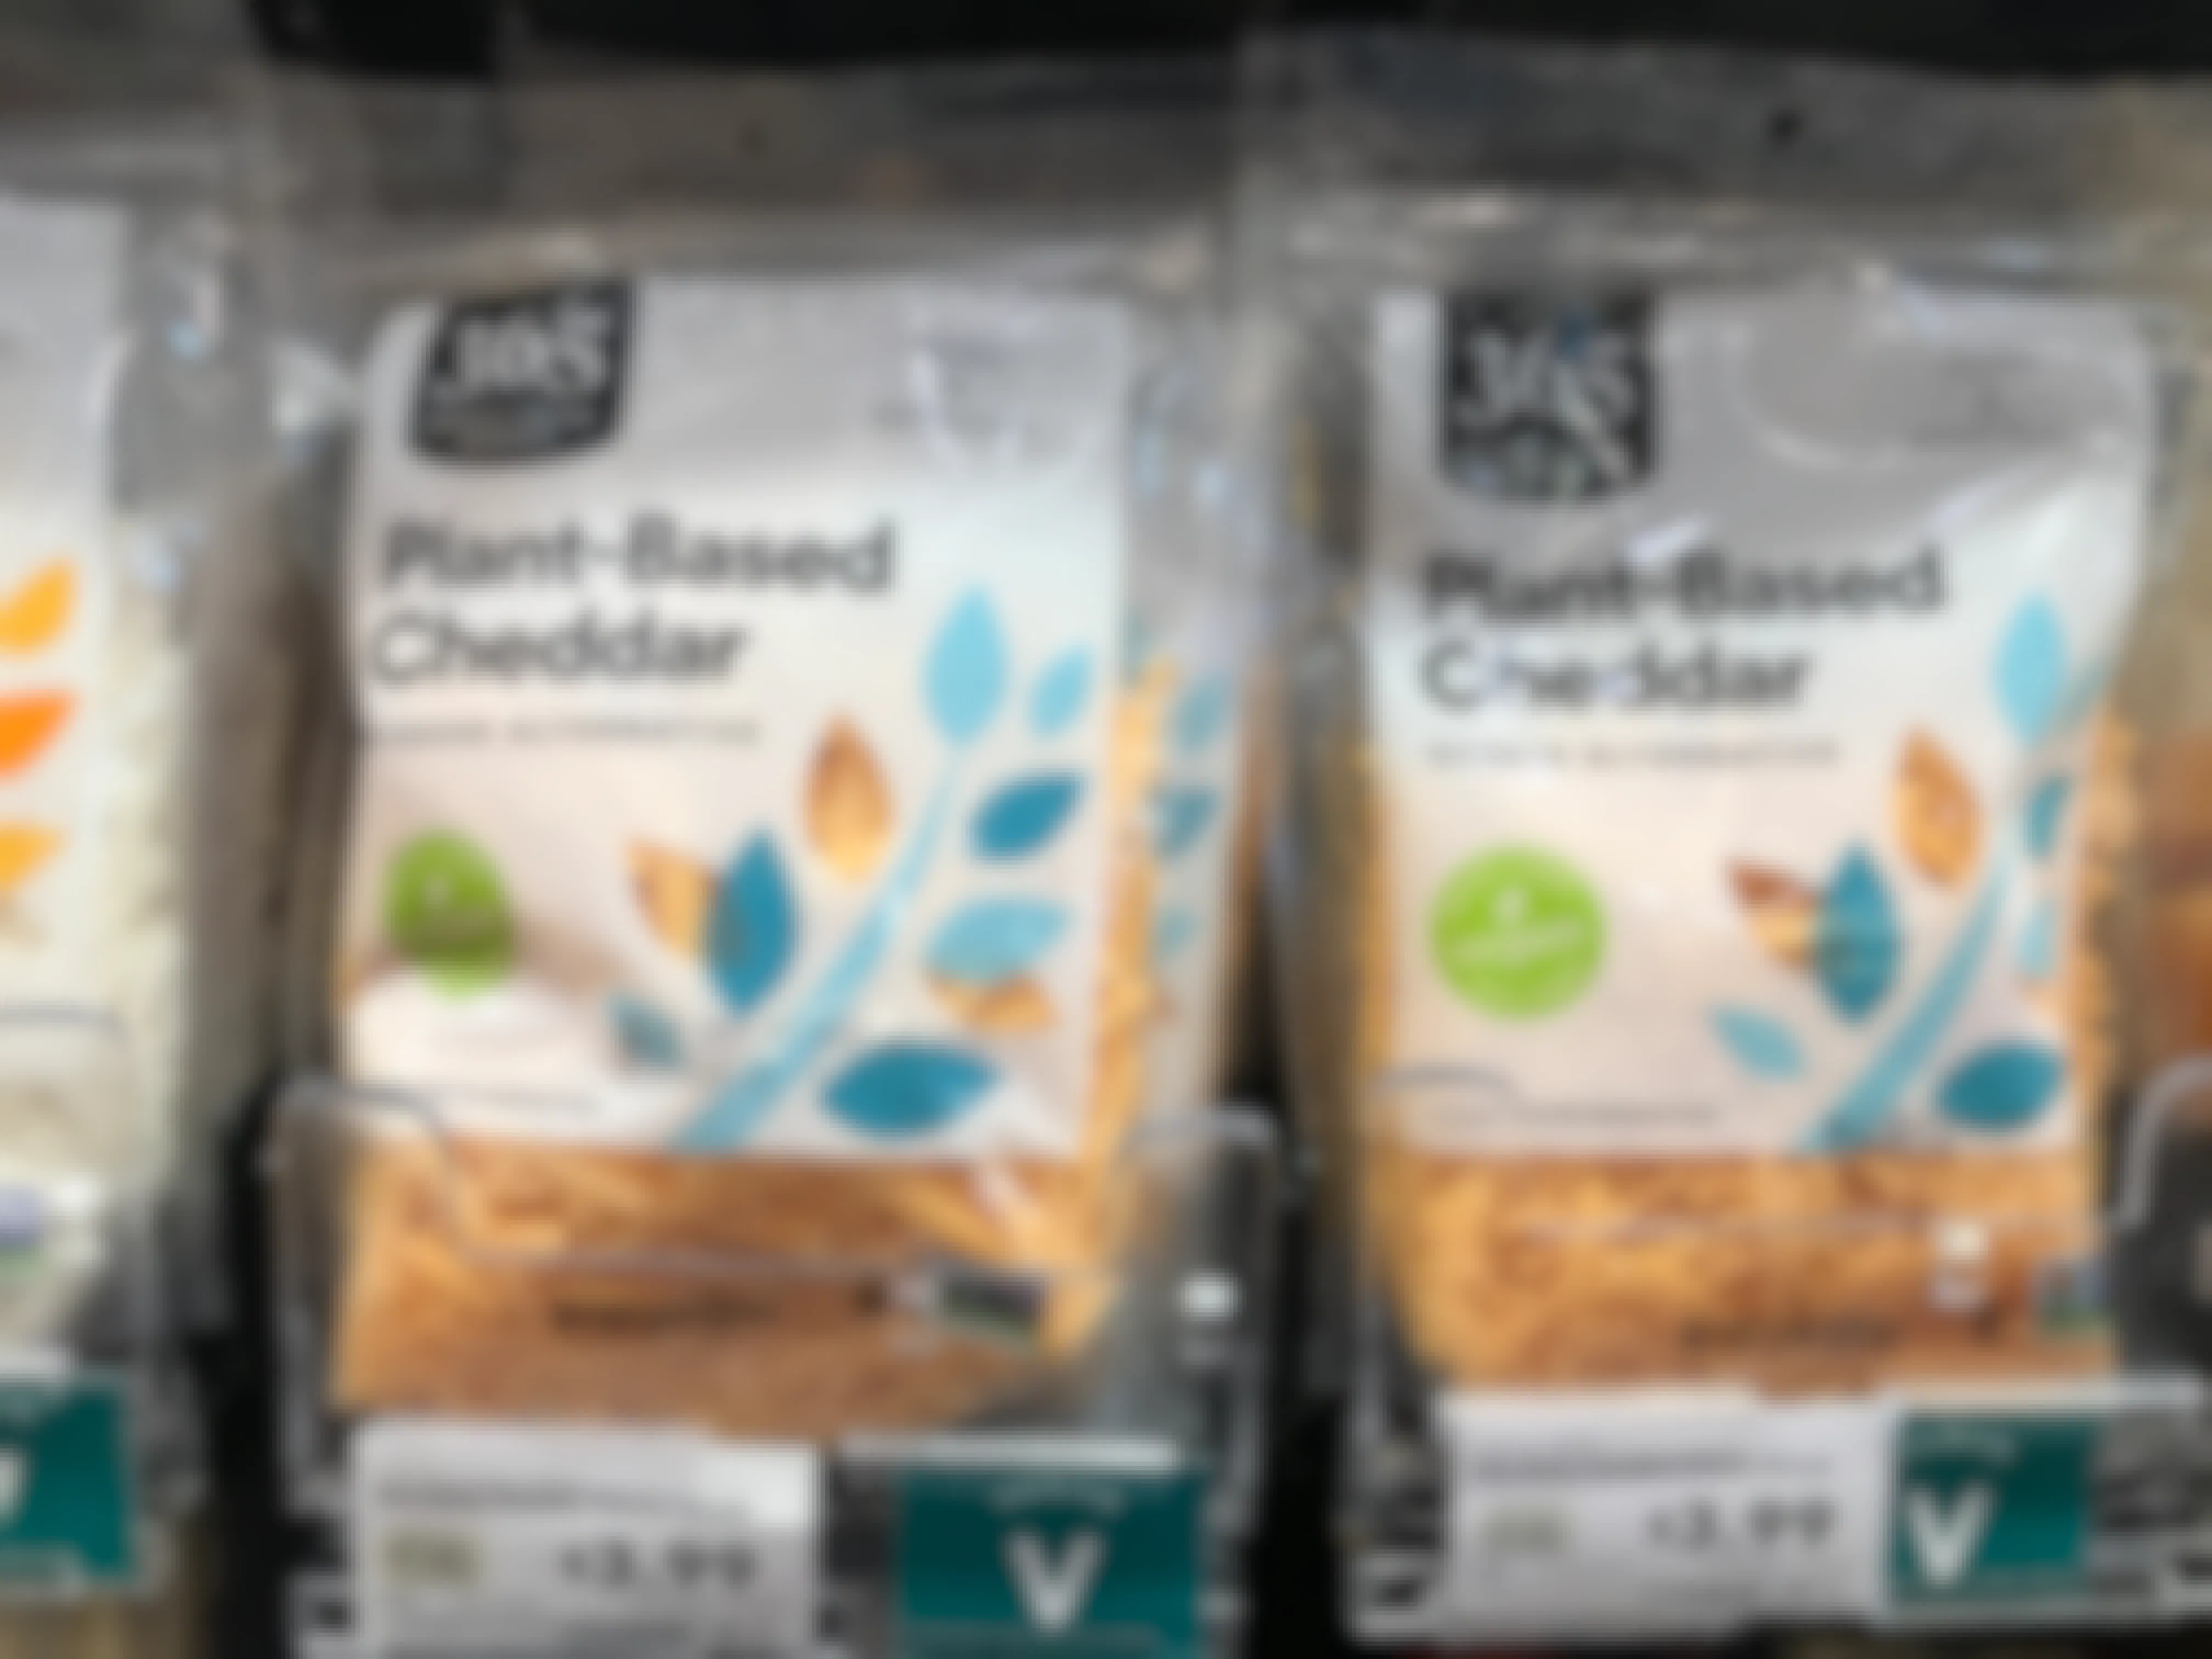 Whole Foods 365 vegan shredded cheddar alternative